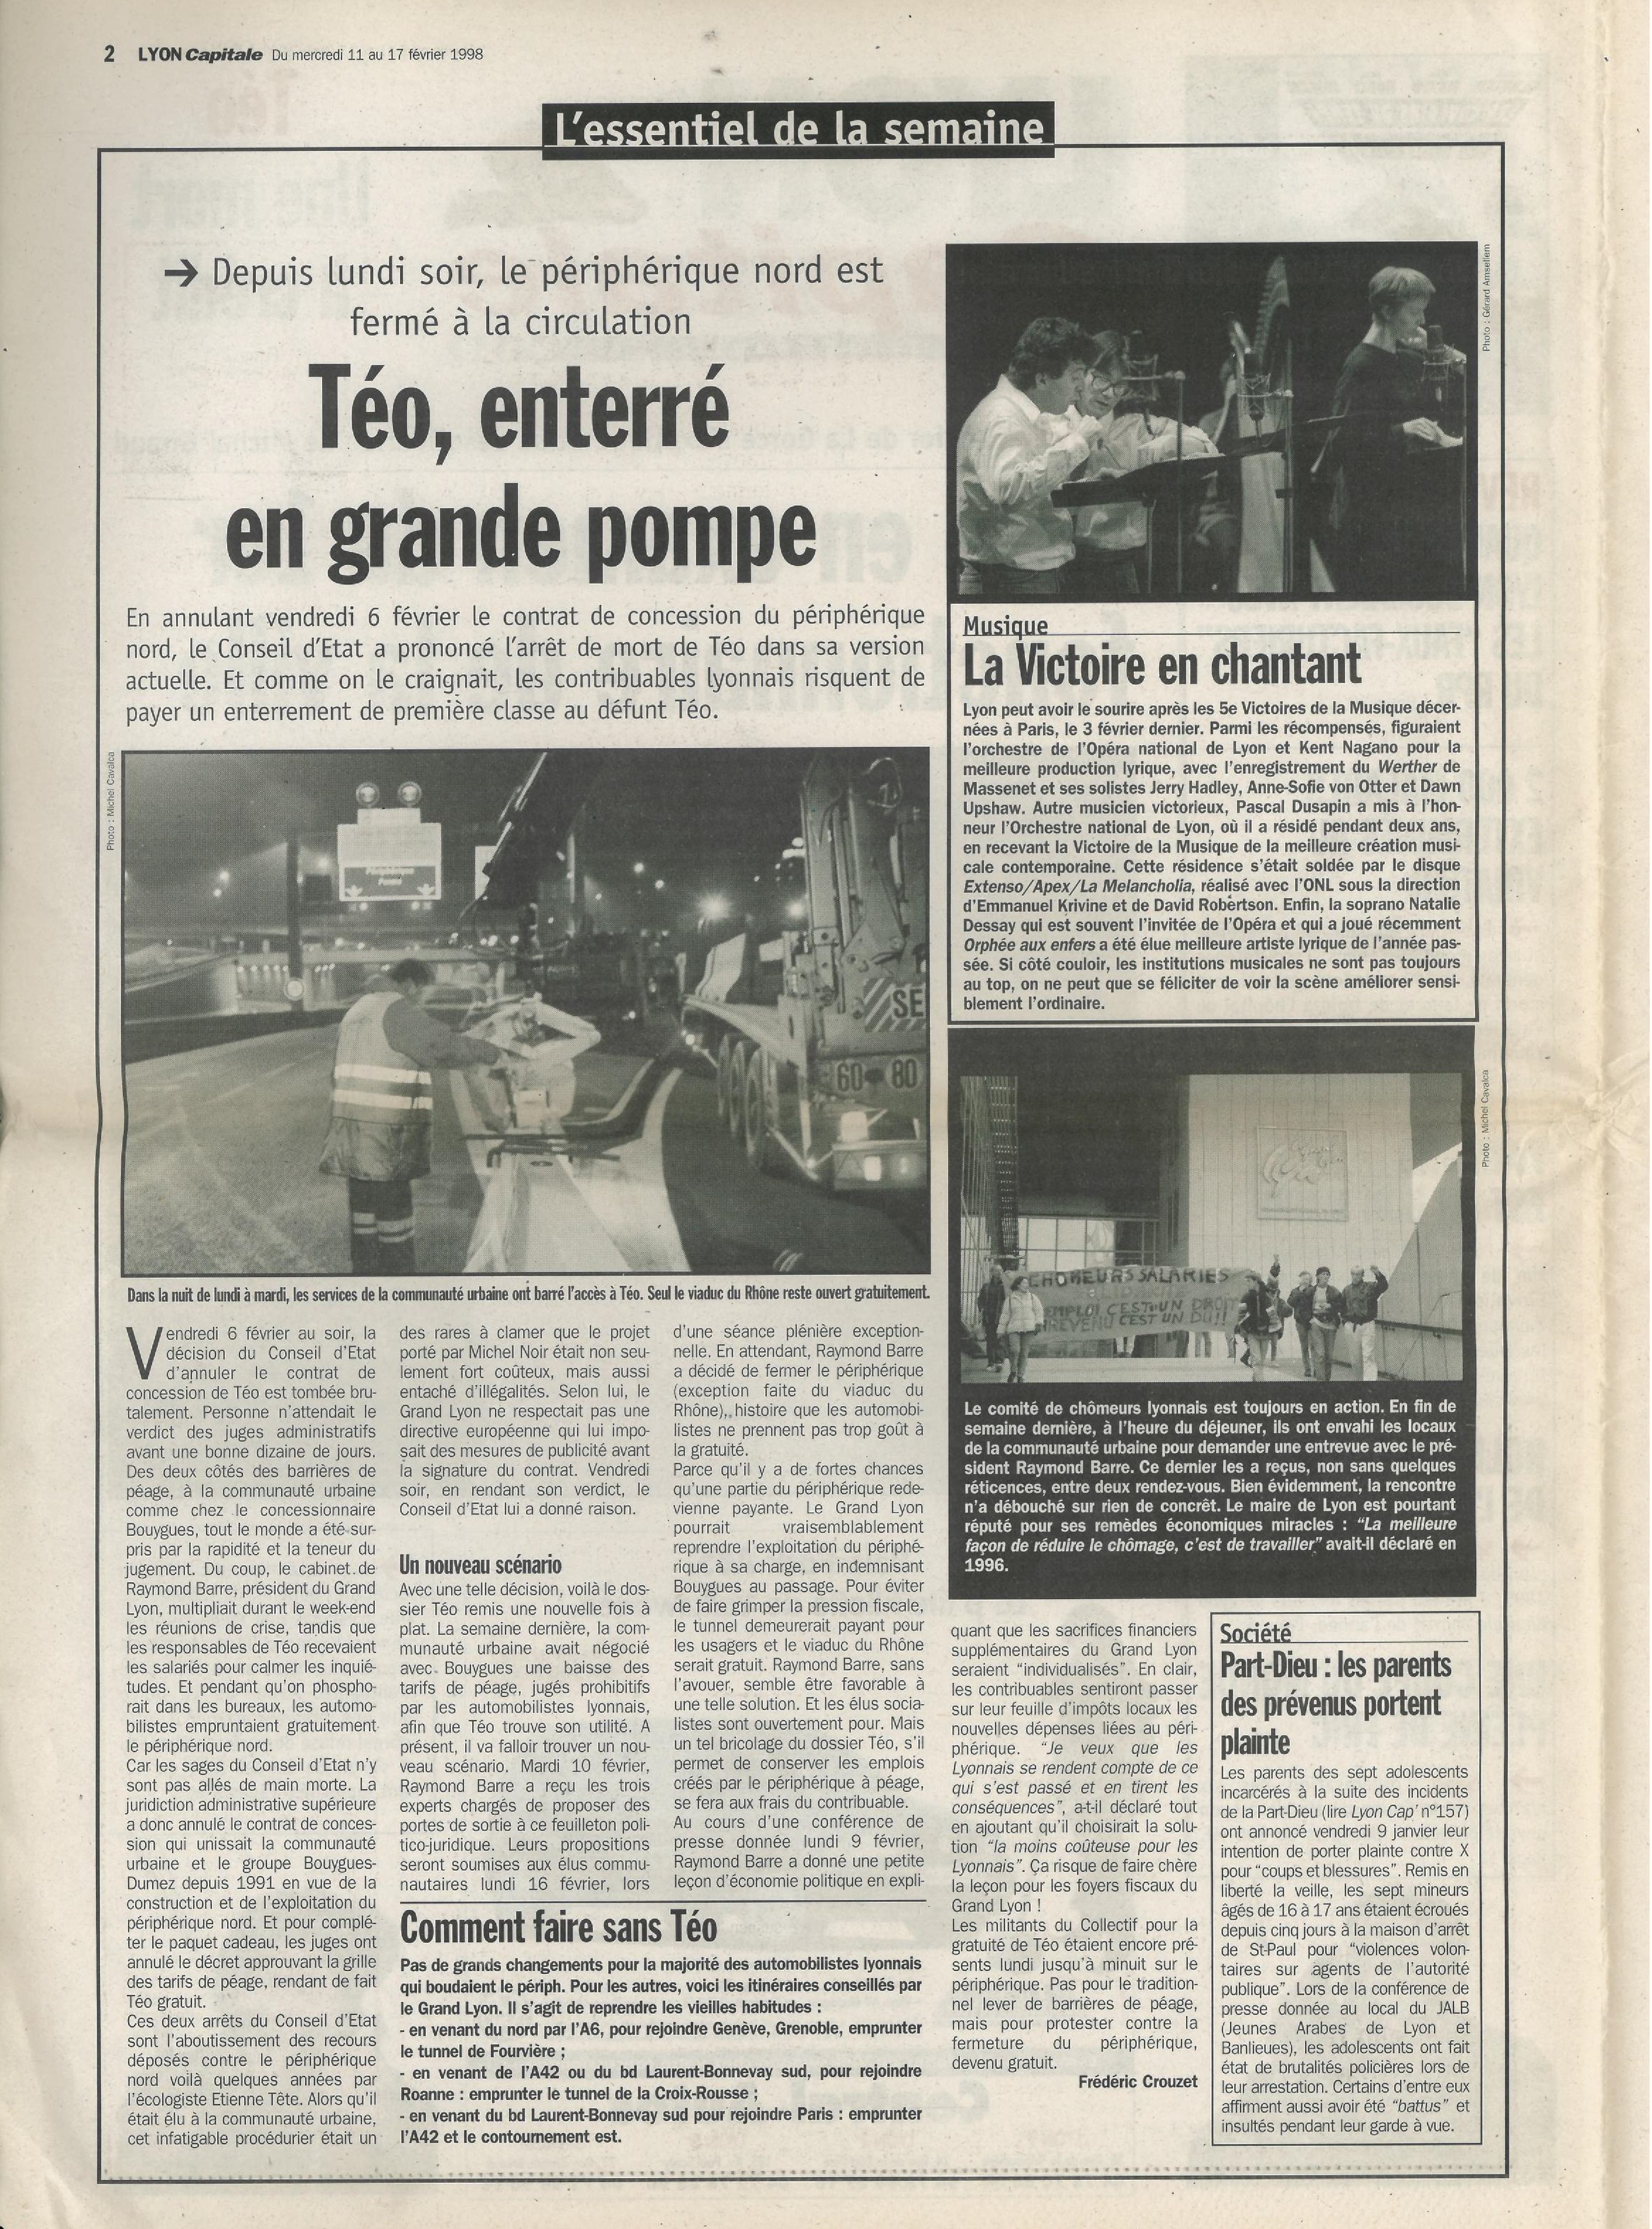 Lyon Capitale n°158, 21 janvier 1998, p. 2 © Lyon Capitale